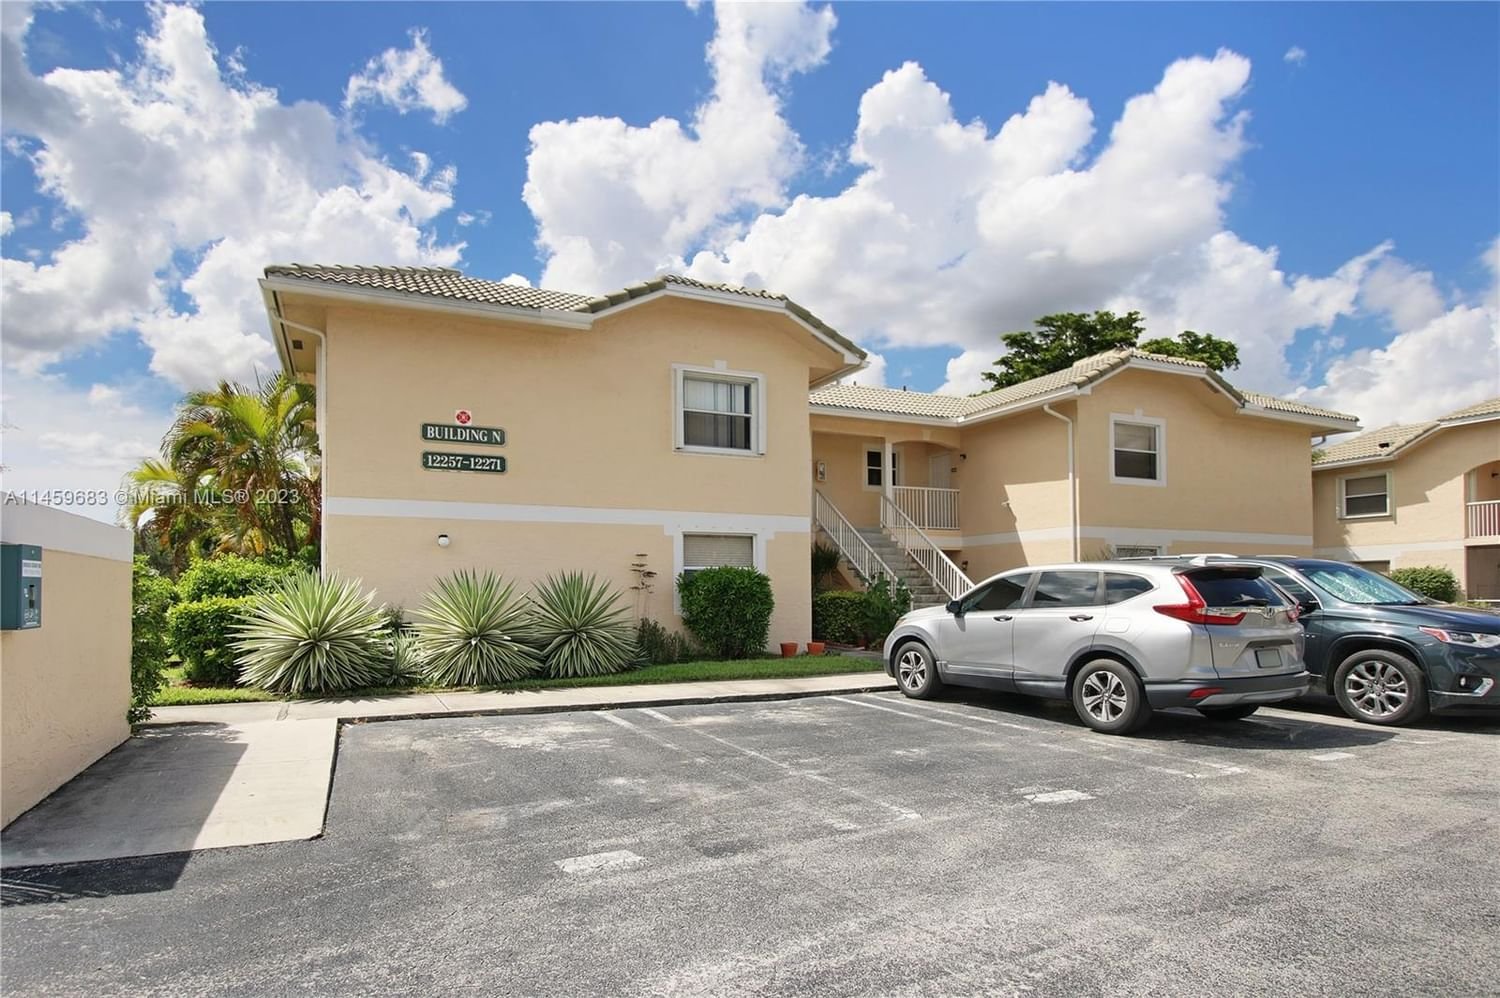 Real estate property located at 12259 Royal Palm Blvd #2N, Broward County, Coral Springs, FL